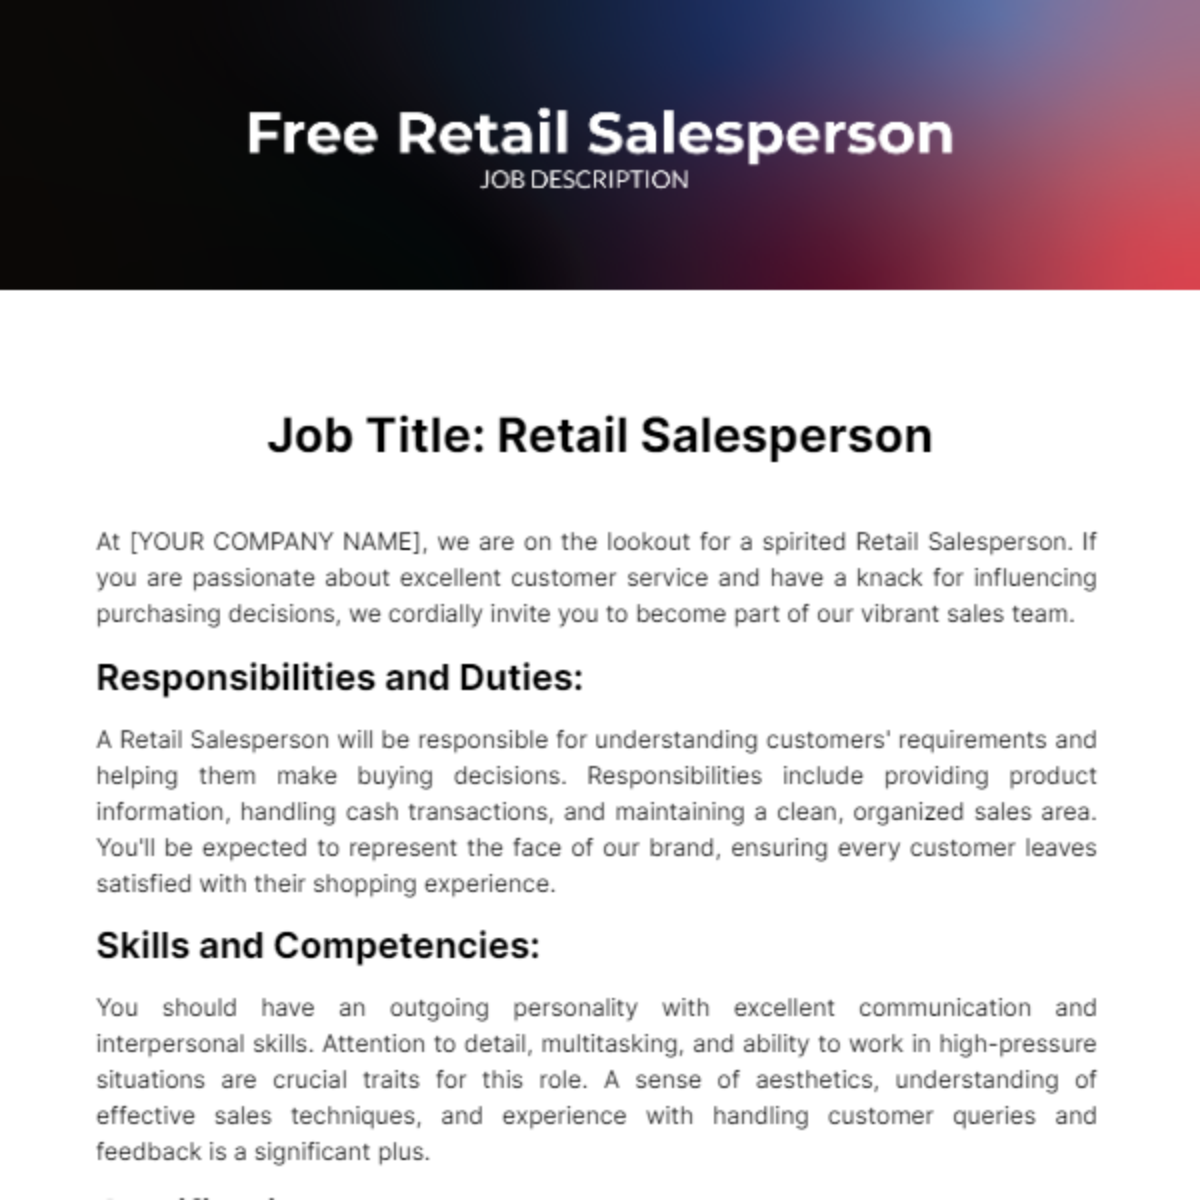 Free Retail Salesperson Job Description Template